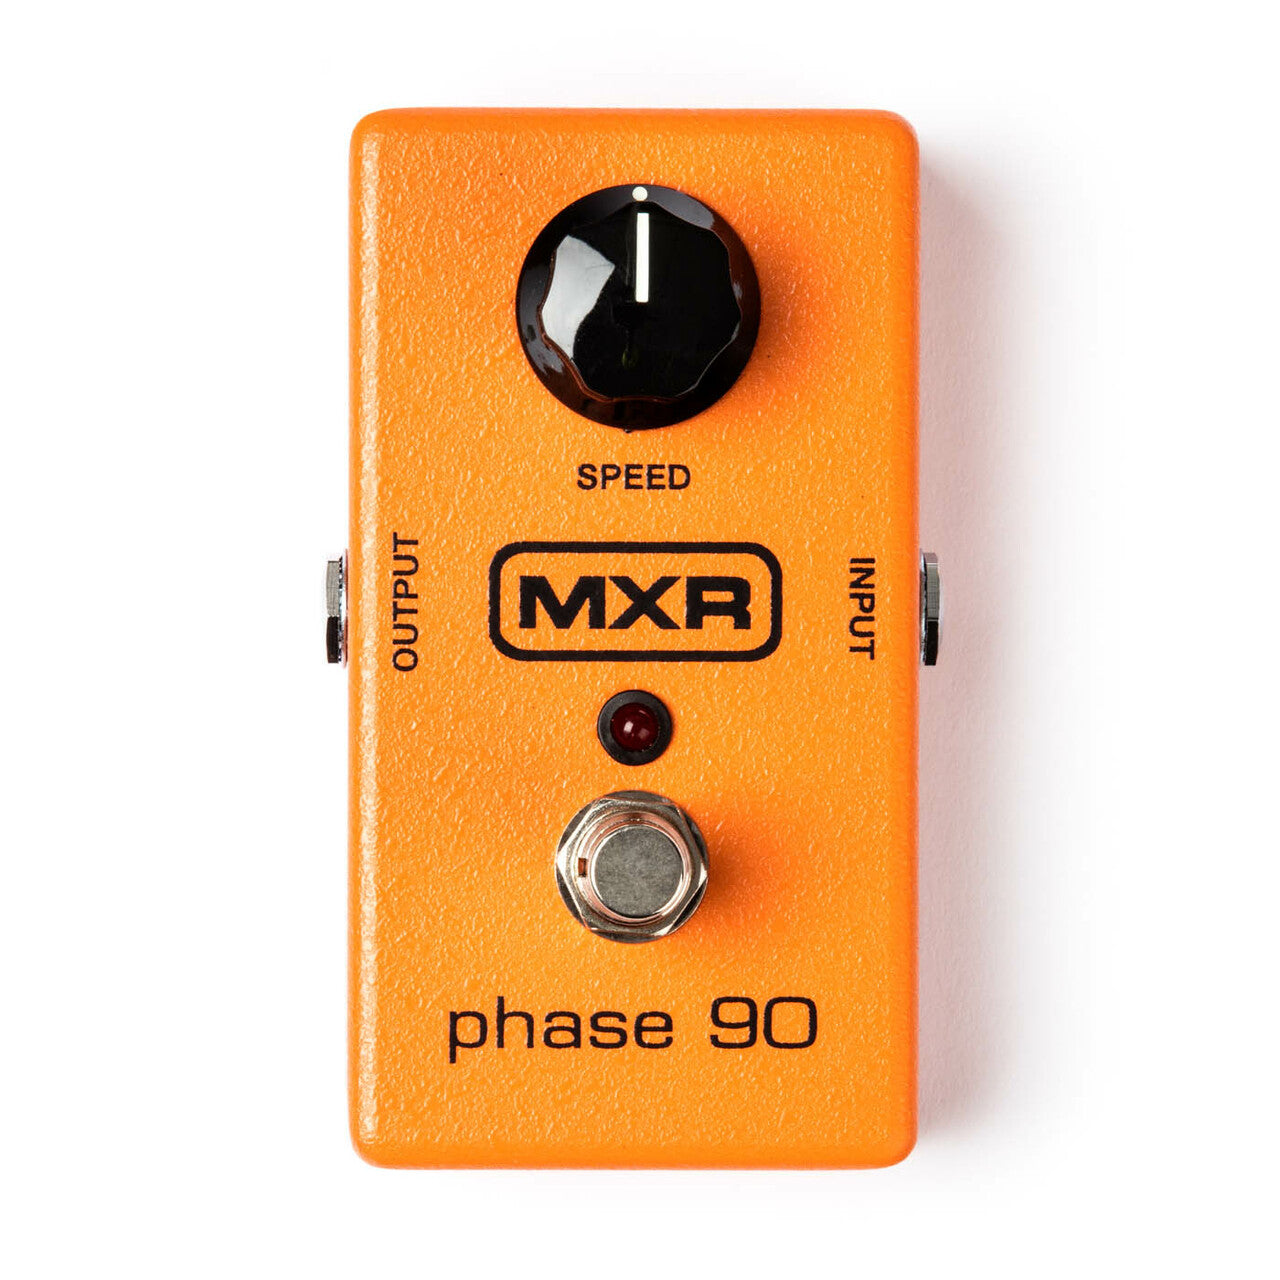 MXR M101 Phase 90 Phase Shifter Modulation Effects Pedal - Orange